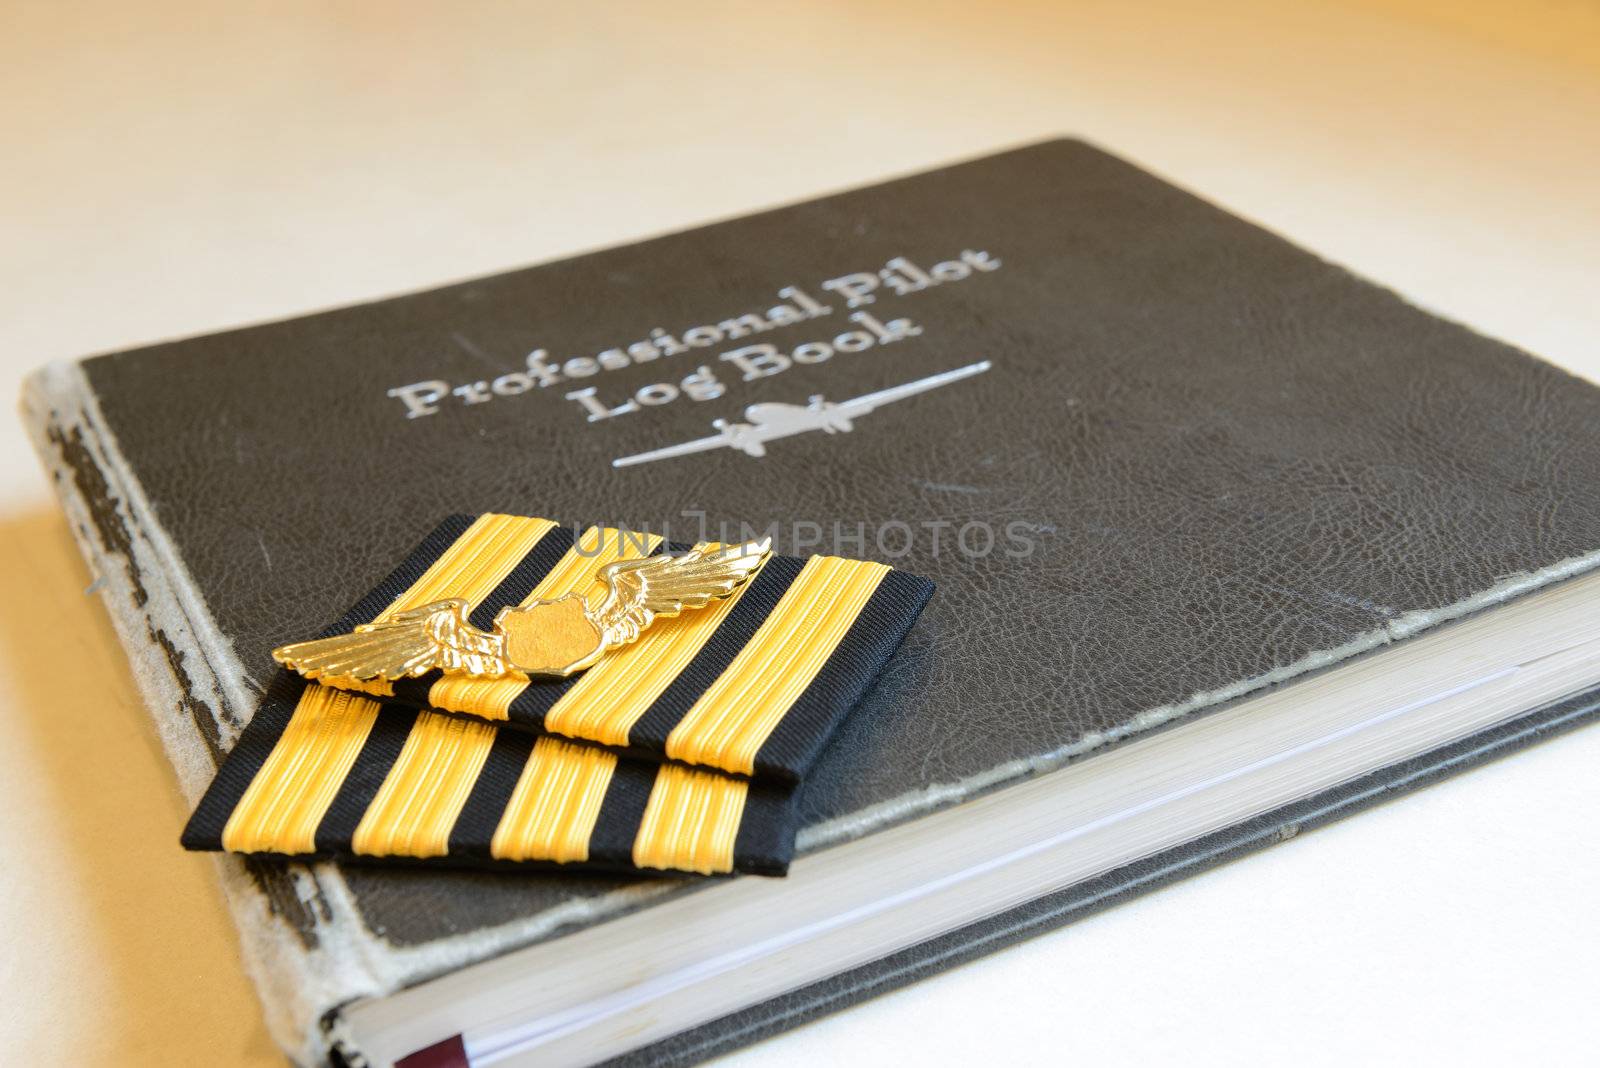 Four bar sign and golden metal wing of pilot put on the old pilot log book.